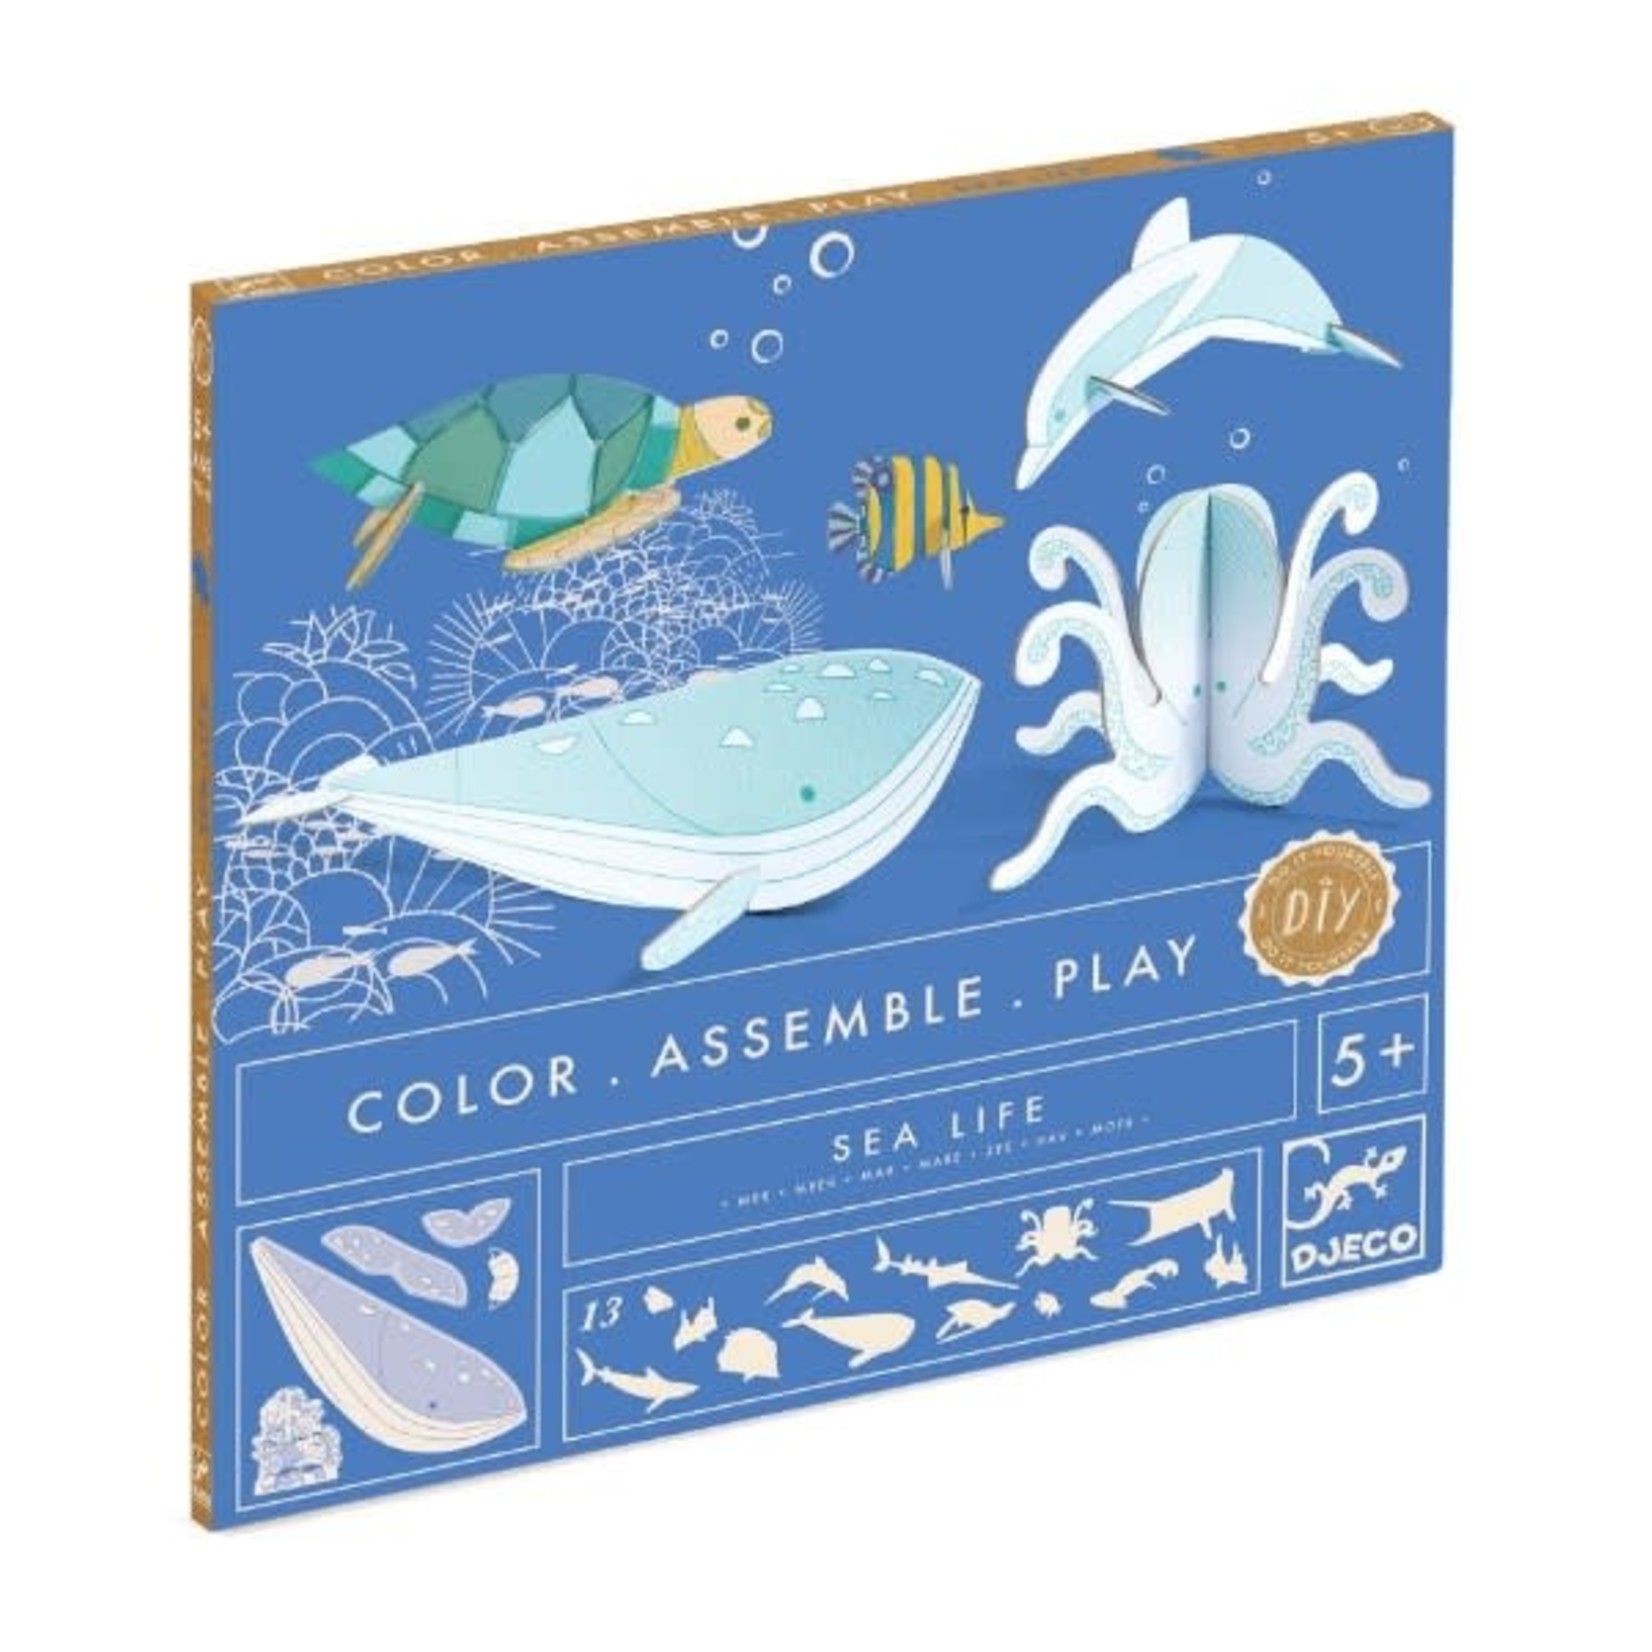 Djeco DJECO - 'Color Assemble Play' DIY Creative Kit - Sea Life